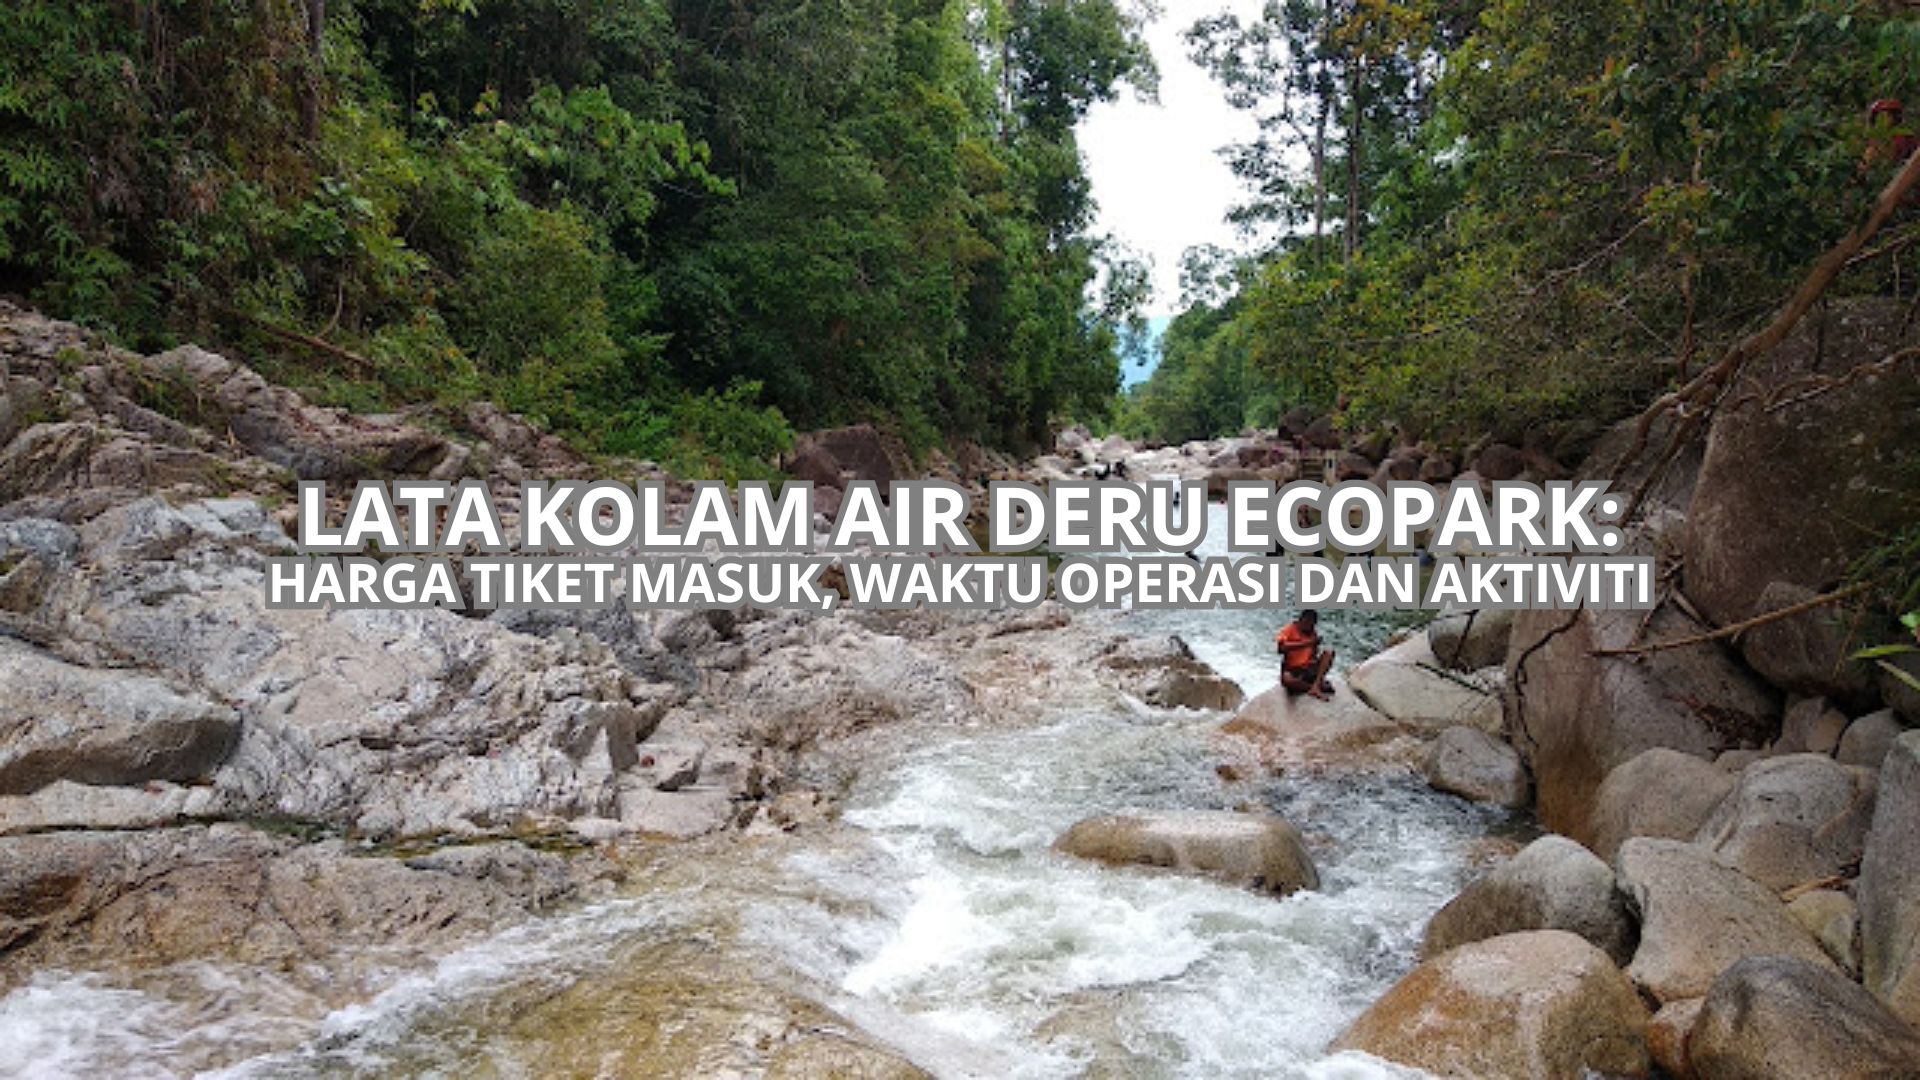 Lata Kolam Air Deru Ecopark Cover